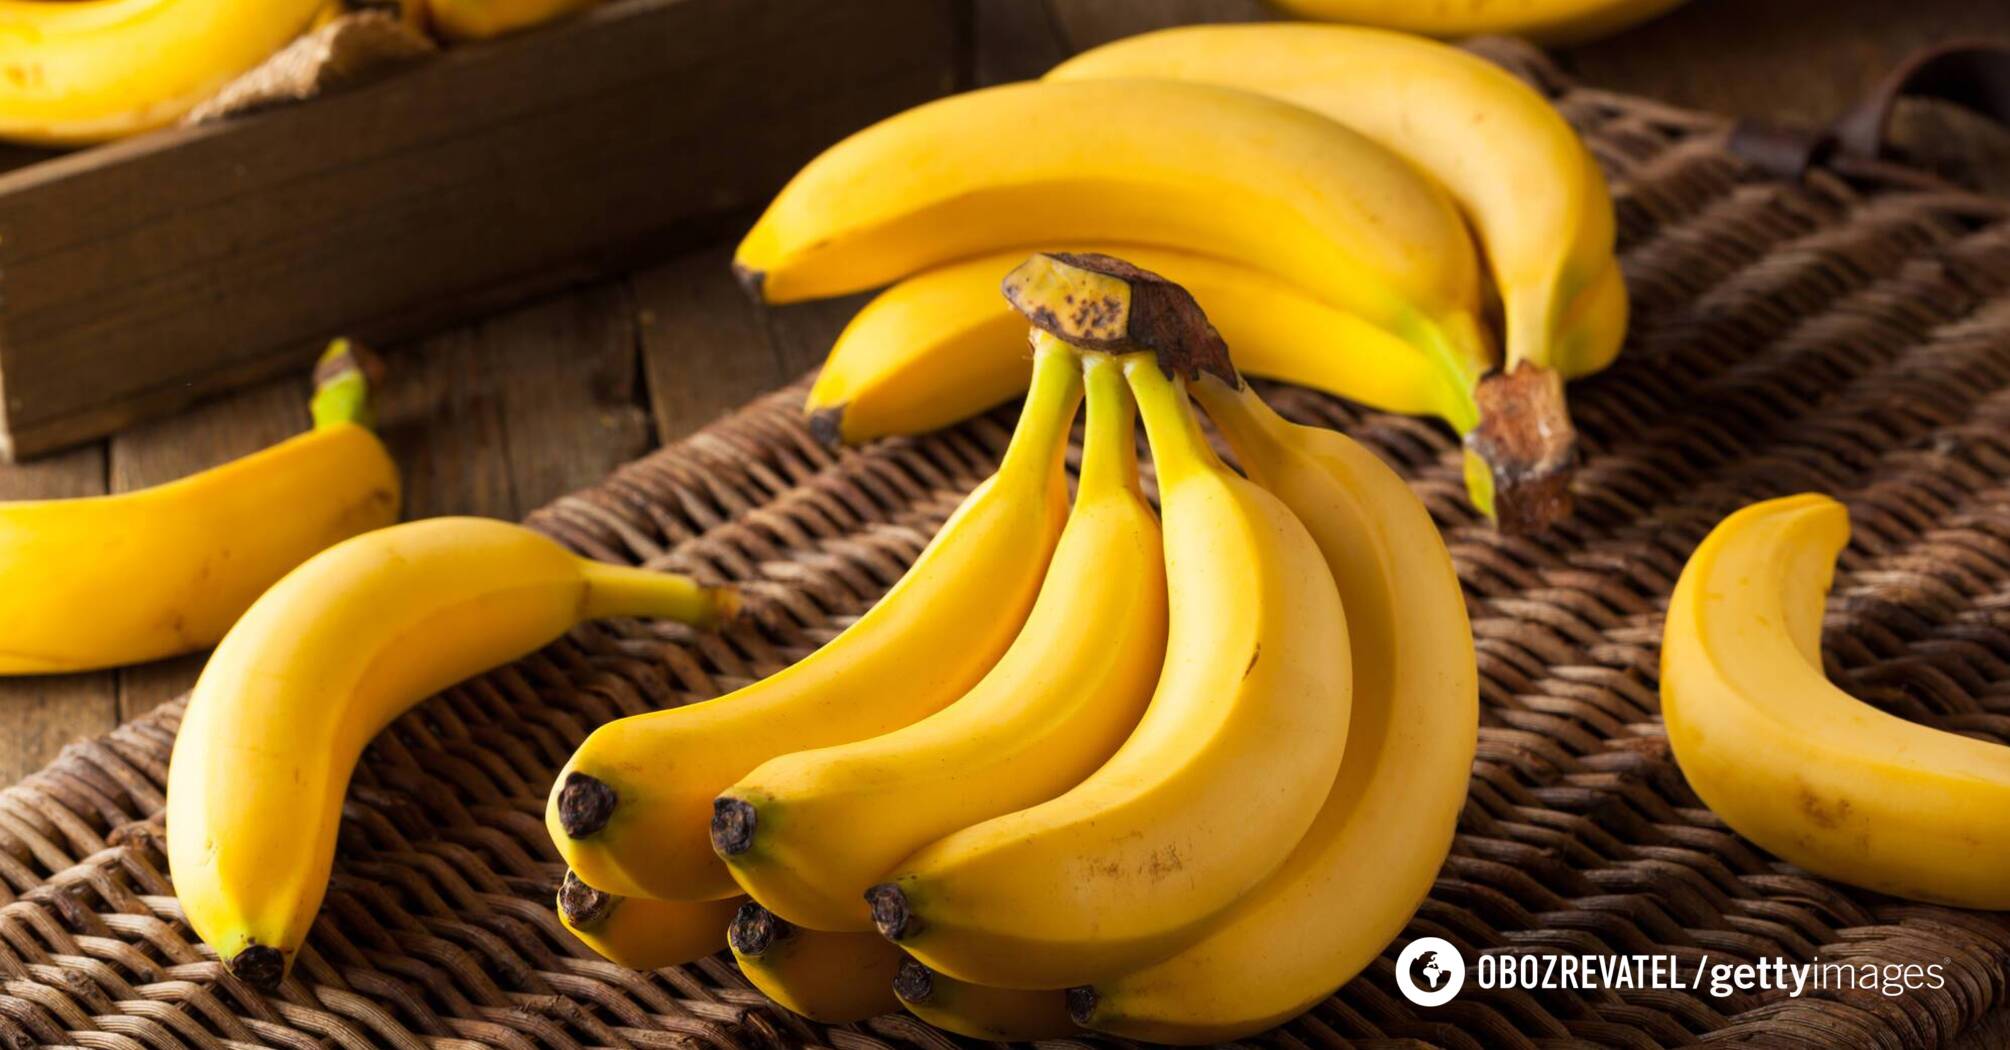 Bananas improve digestion